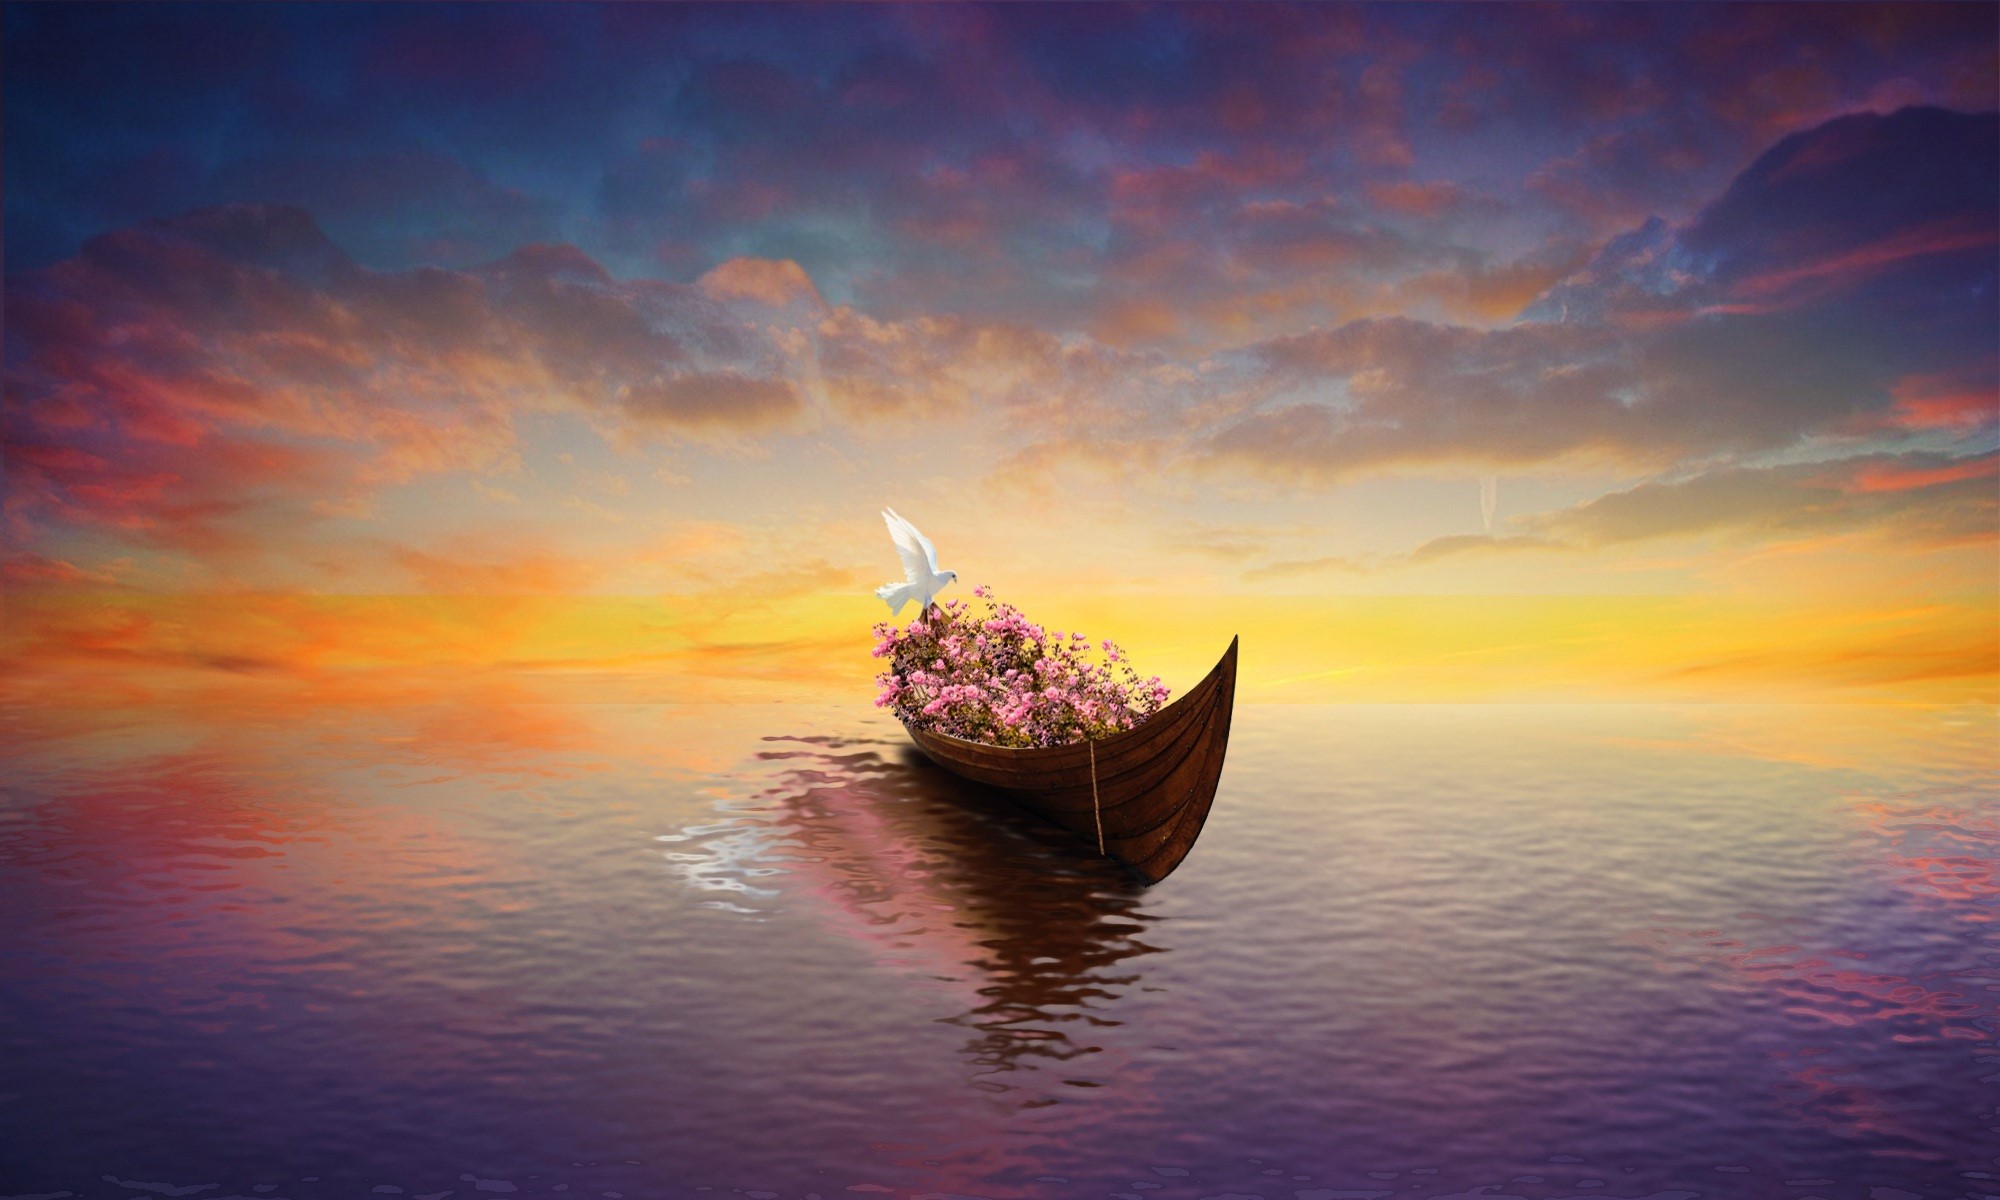 869511 descargar imagen artístico, bote, canoa, paloma, flor, horizonte: fondos de pantalla y protectores de pantalla gratis